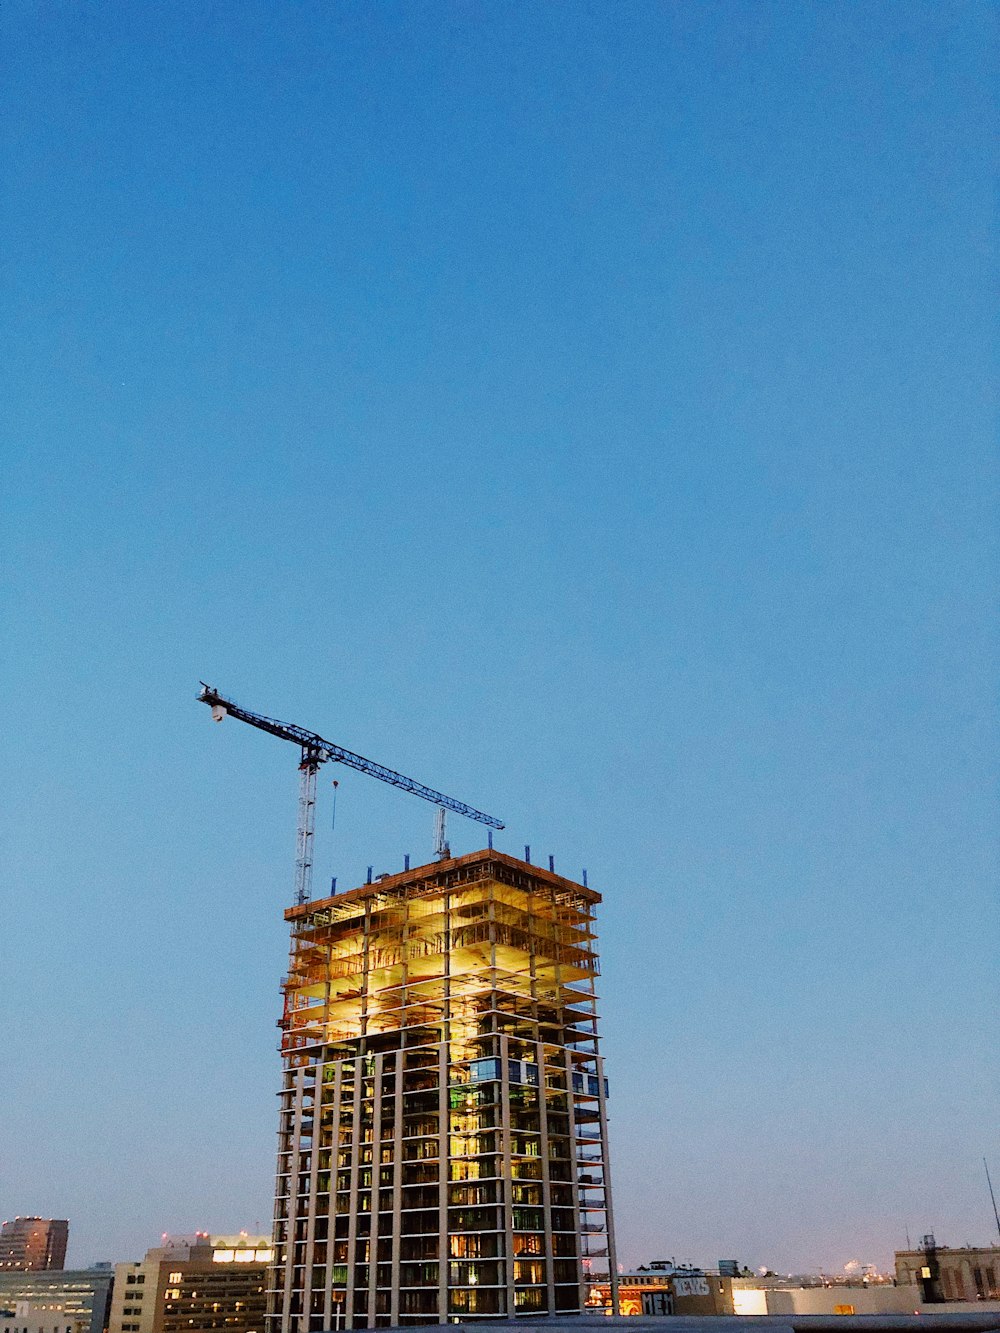 gray crane on building